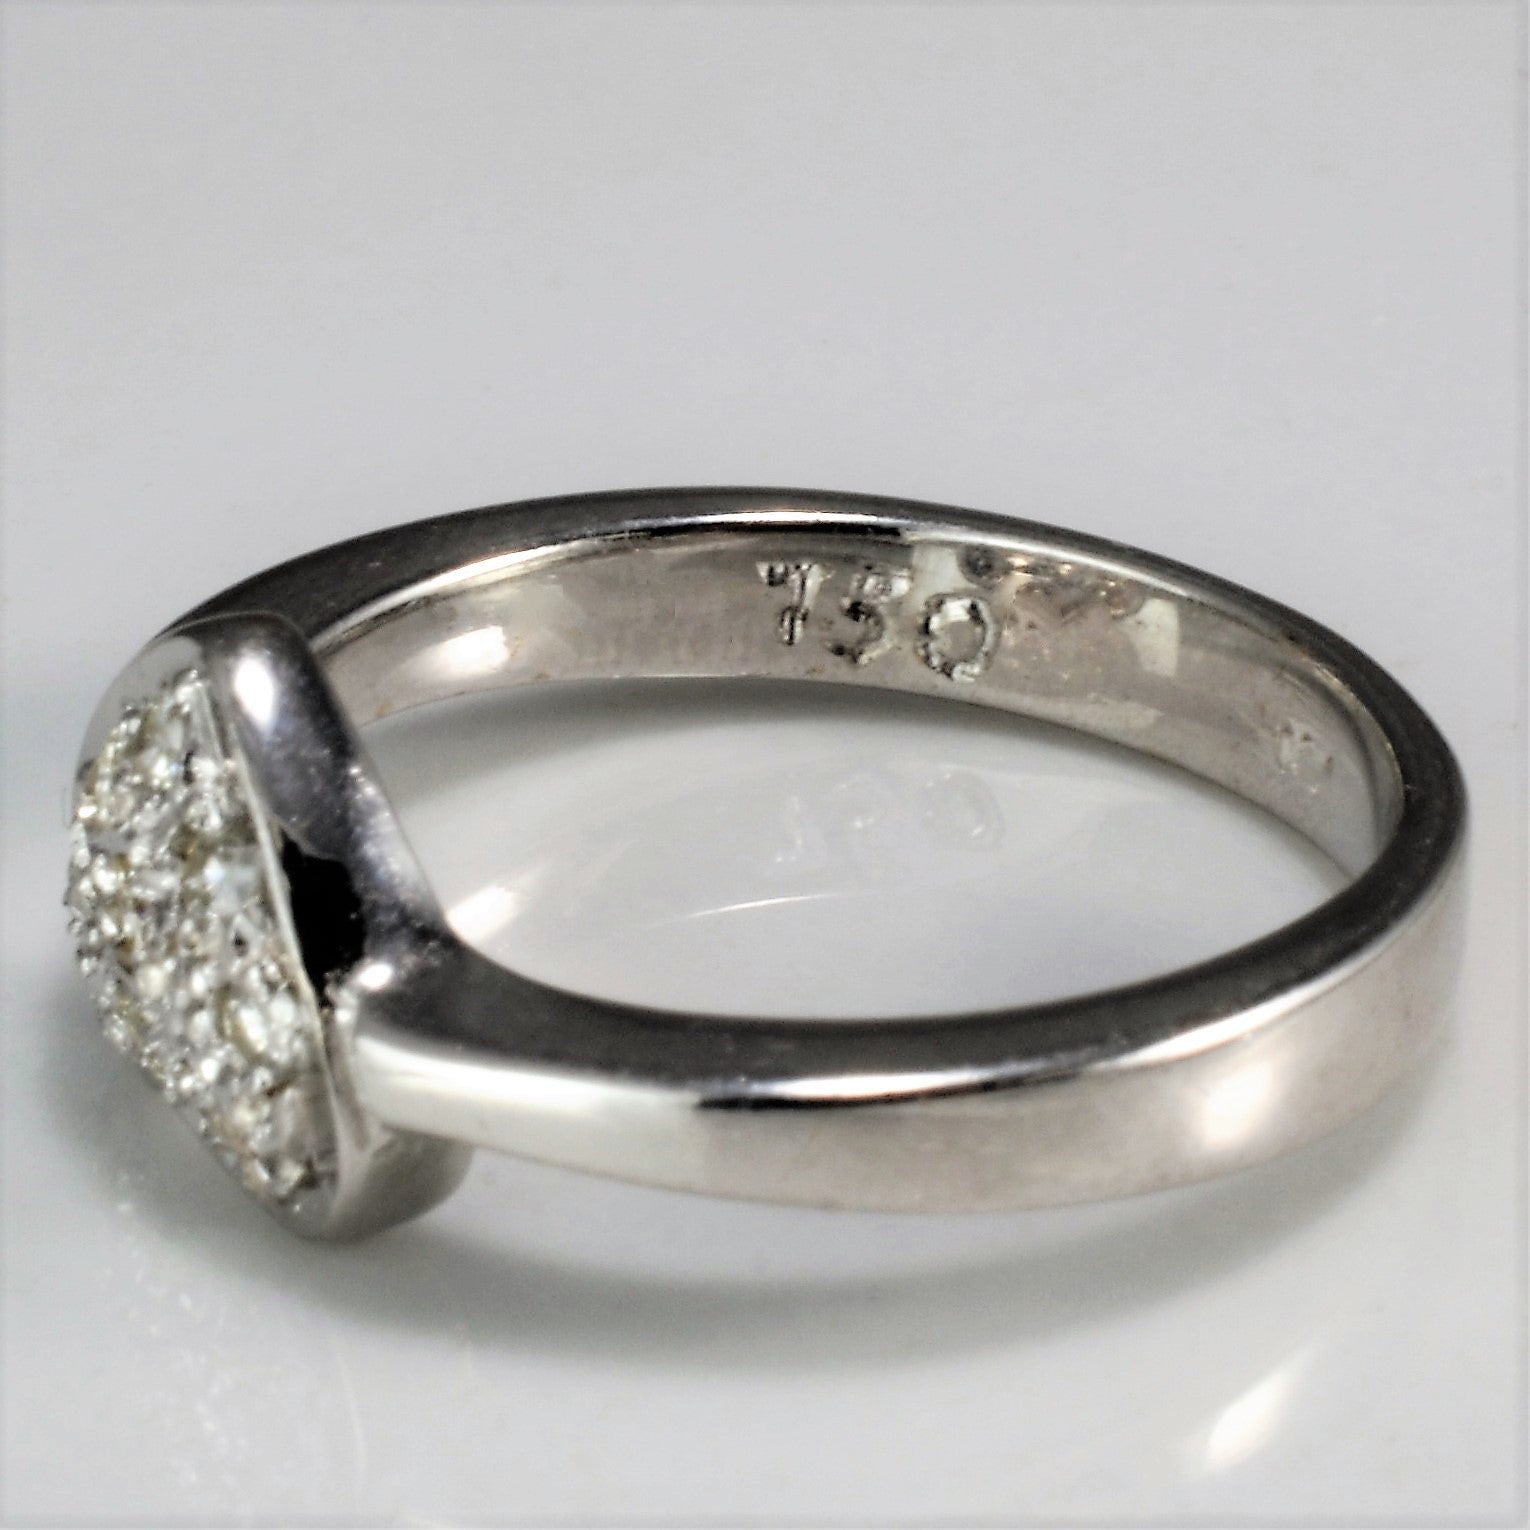 Pave Diamond Heart Ring | 0.15 ctw, SZ 5 |